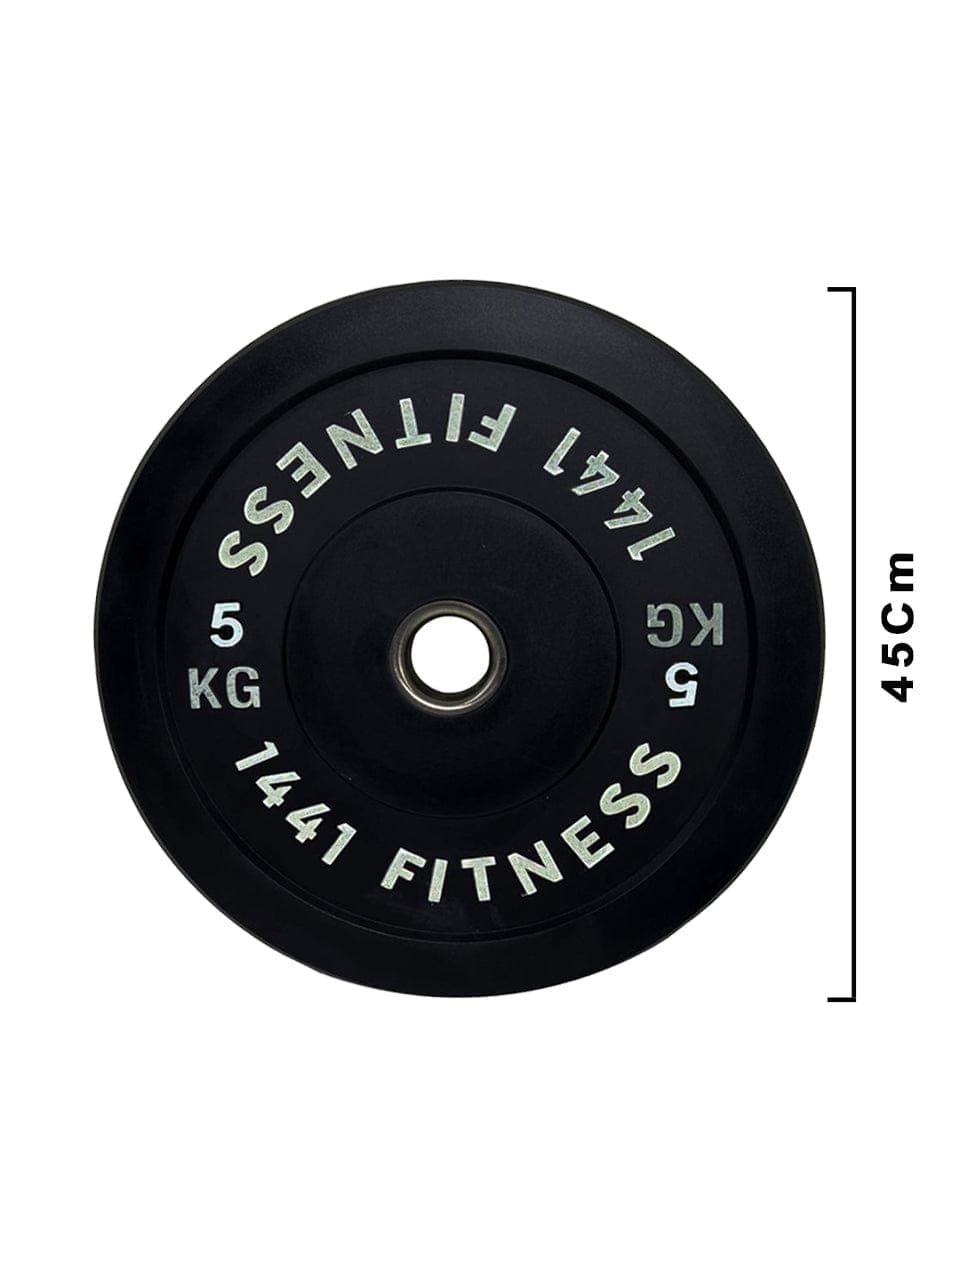 PRSAE Plates & Bars 5 KG 1441 Fitness Black Rubber Bumper Plates - 2.5 to 25 KG | Per Piece